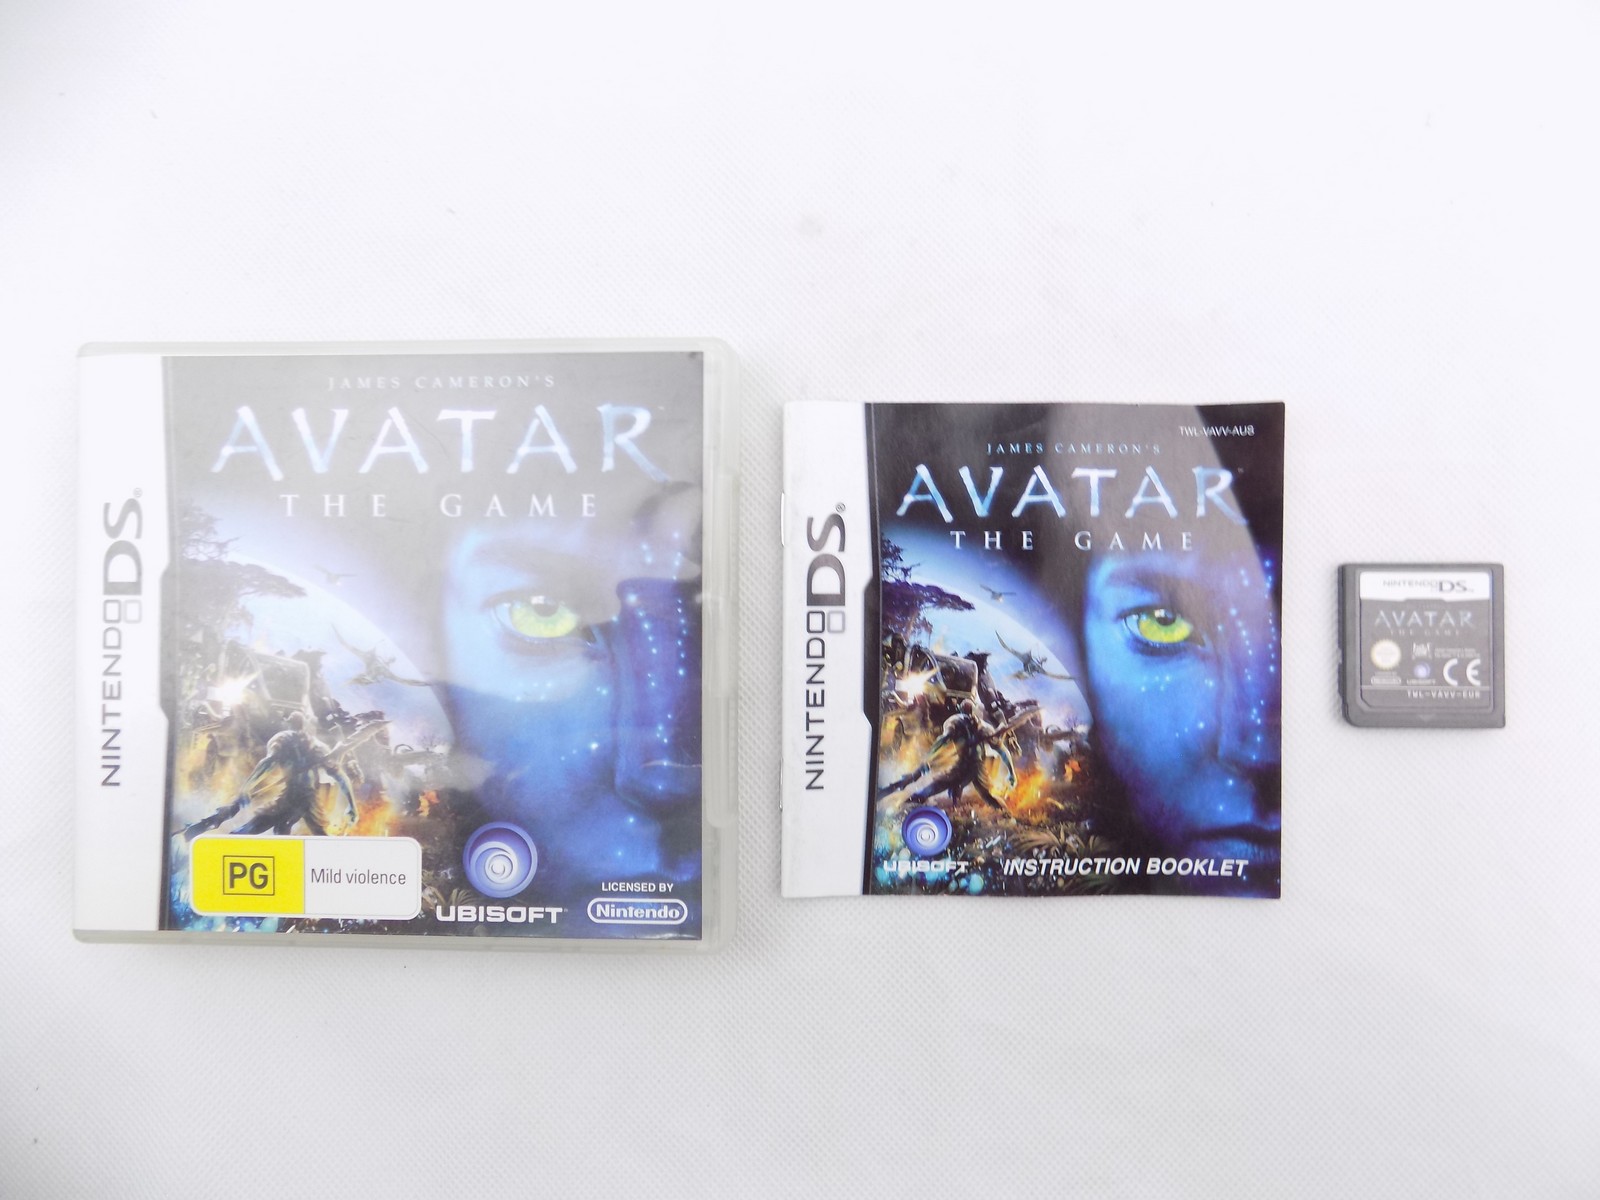 Gallery James Camerons Avatar The Game Nintendo DS  Avatar Wiki   Fandom